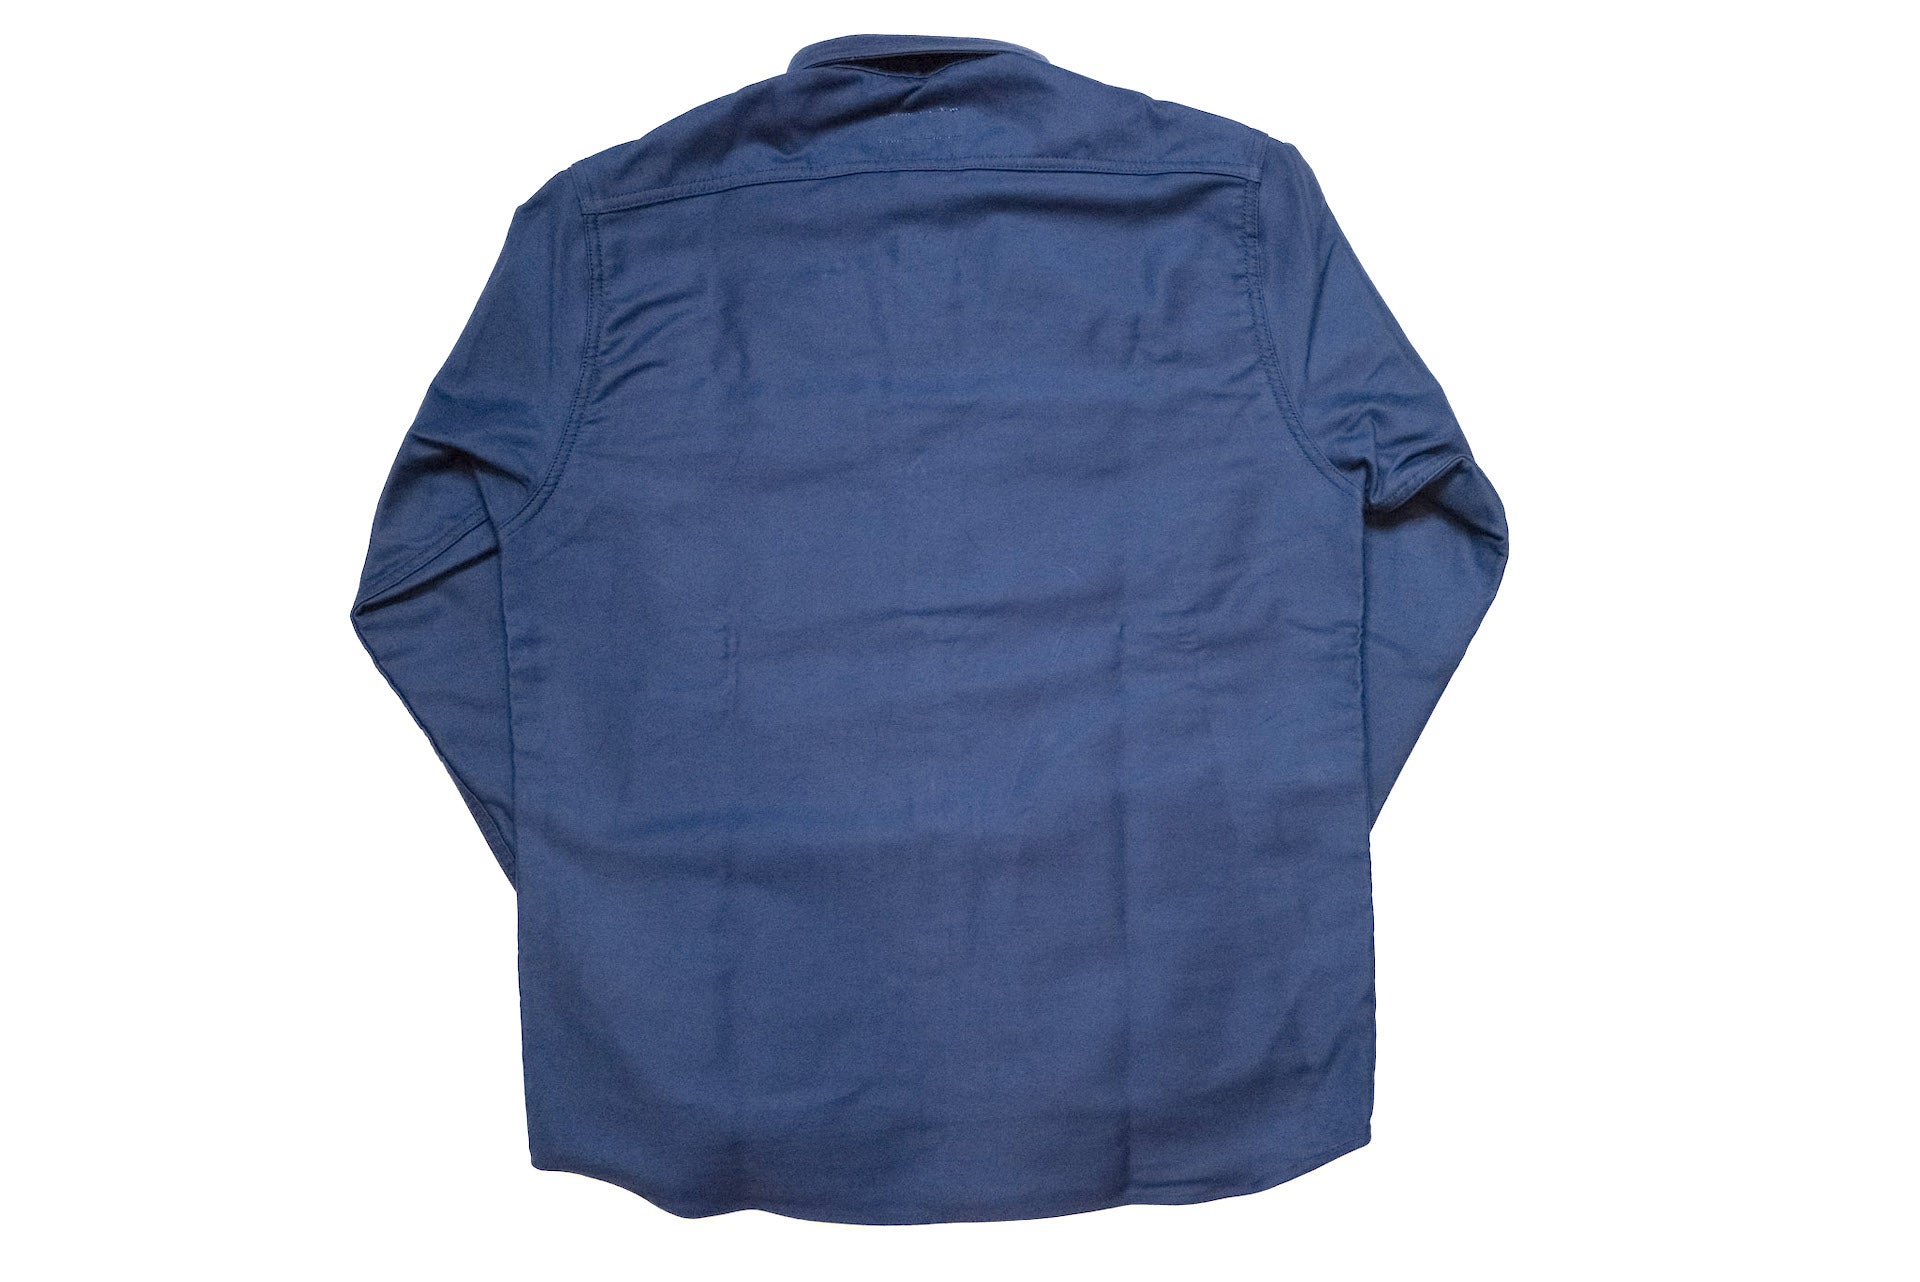 Unique Garment 'Deck Master' Moleskin C.P.O Jacketed Shirt (Royal Blue)